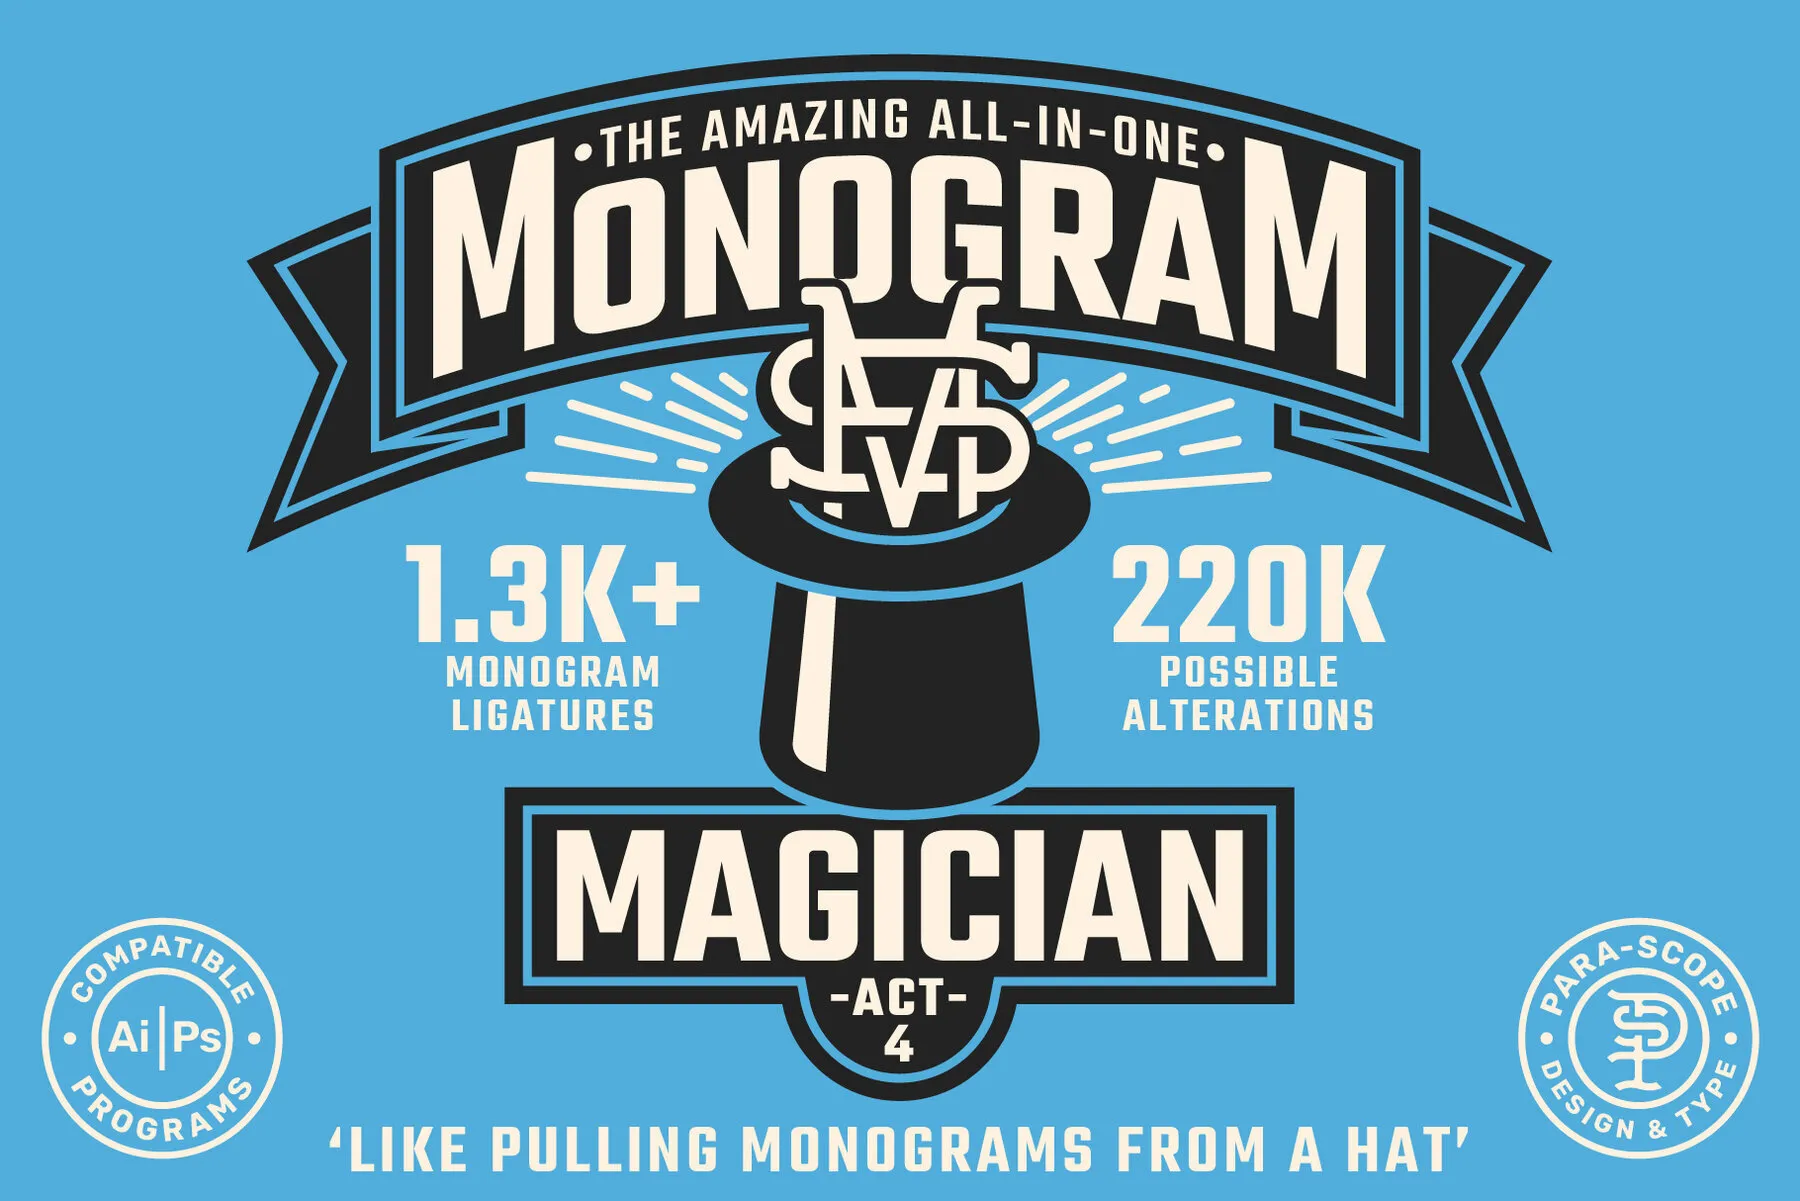 Monogram Magician Act 4